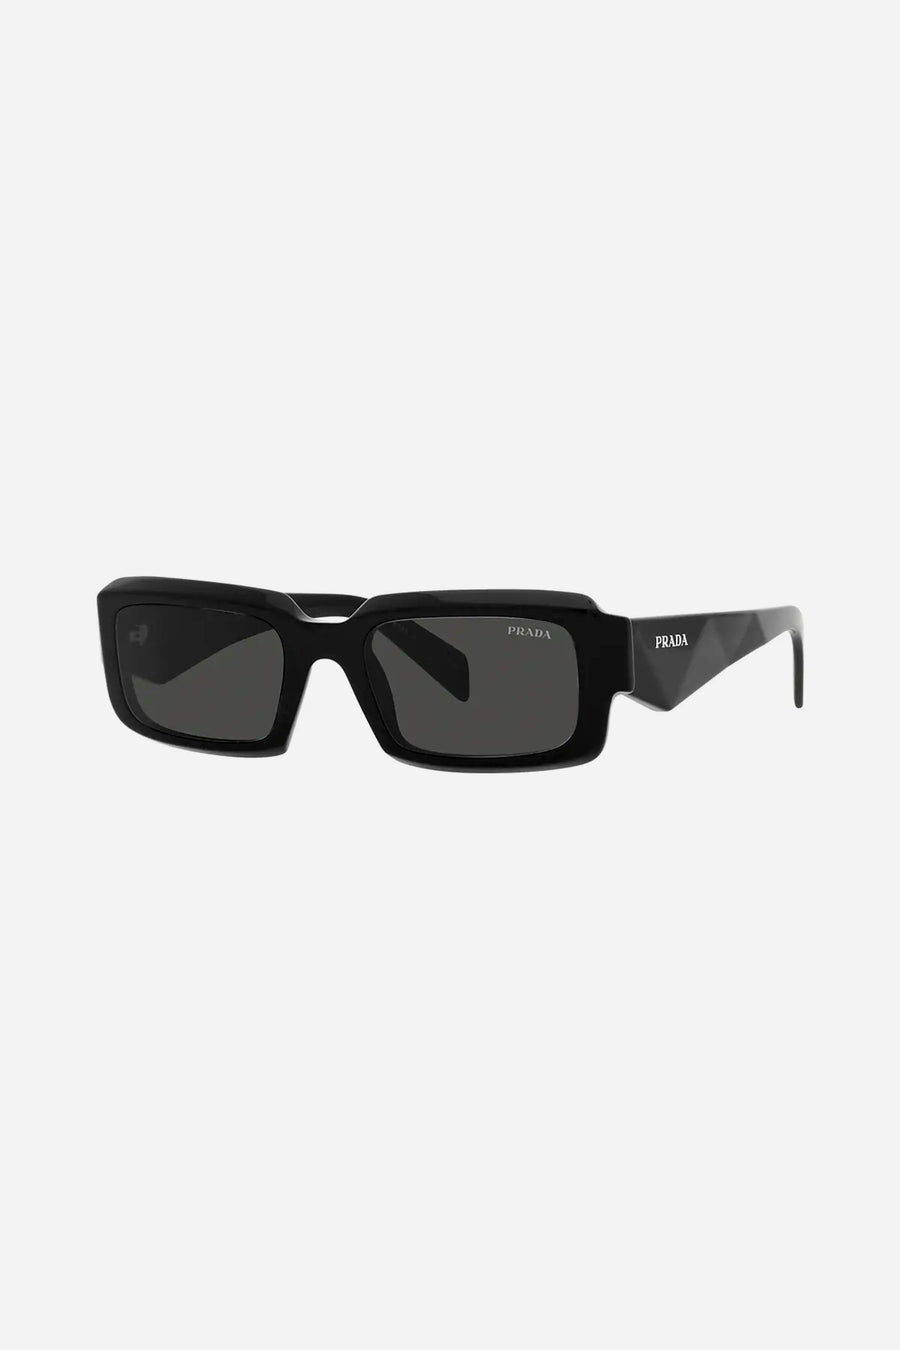 Prada squared PR 27ZS black sunglasses